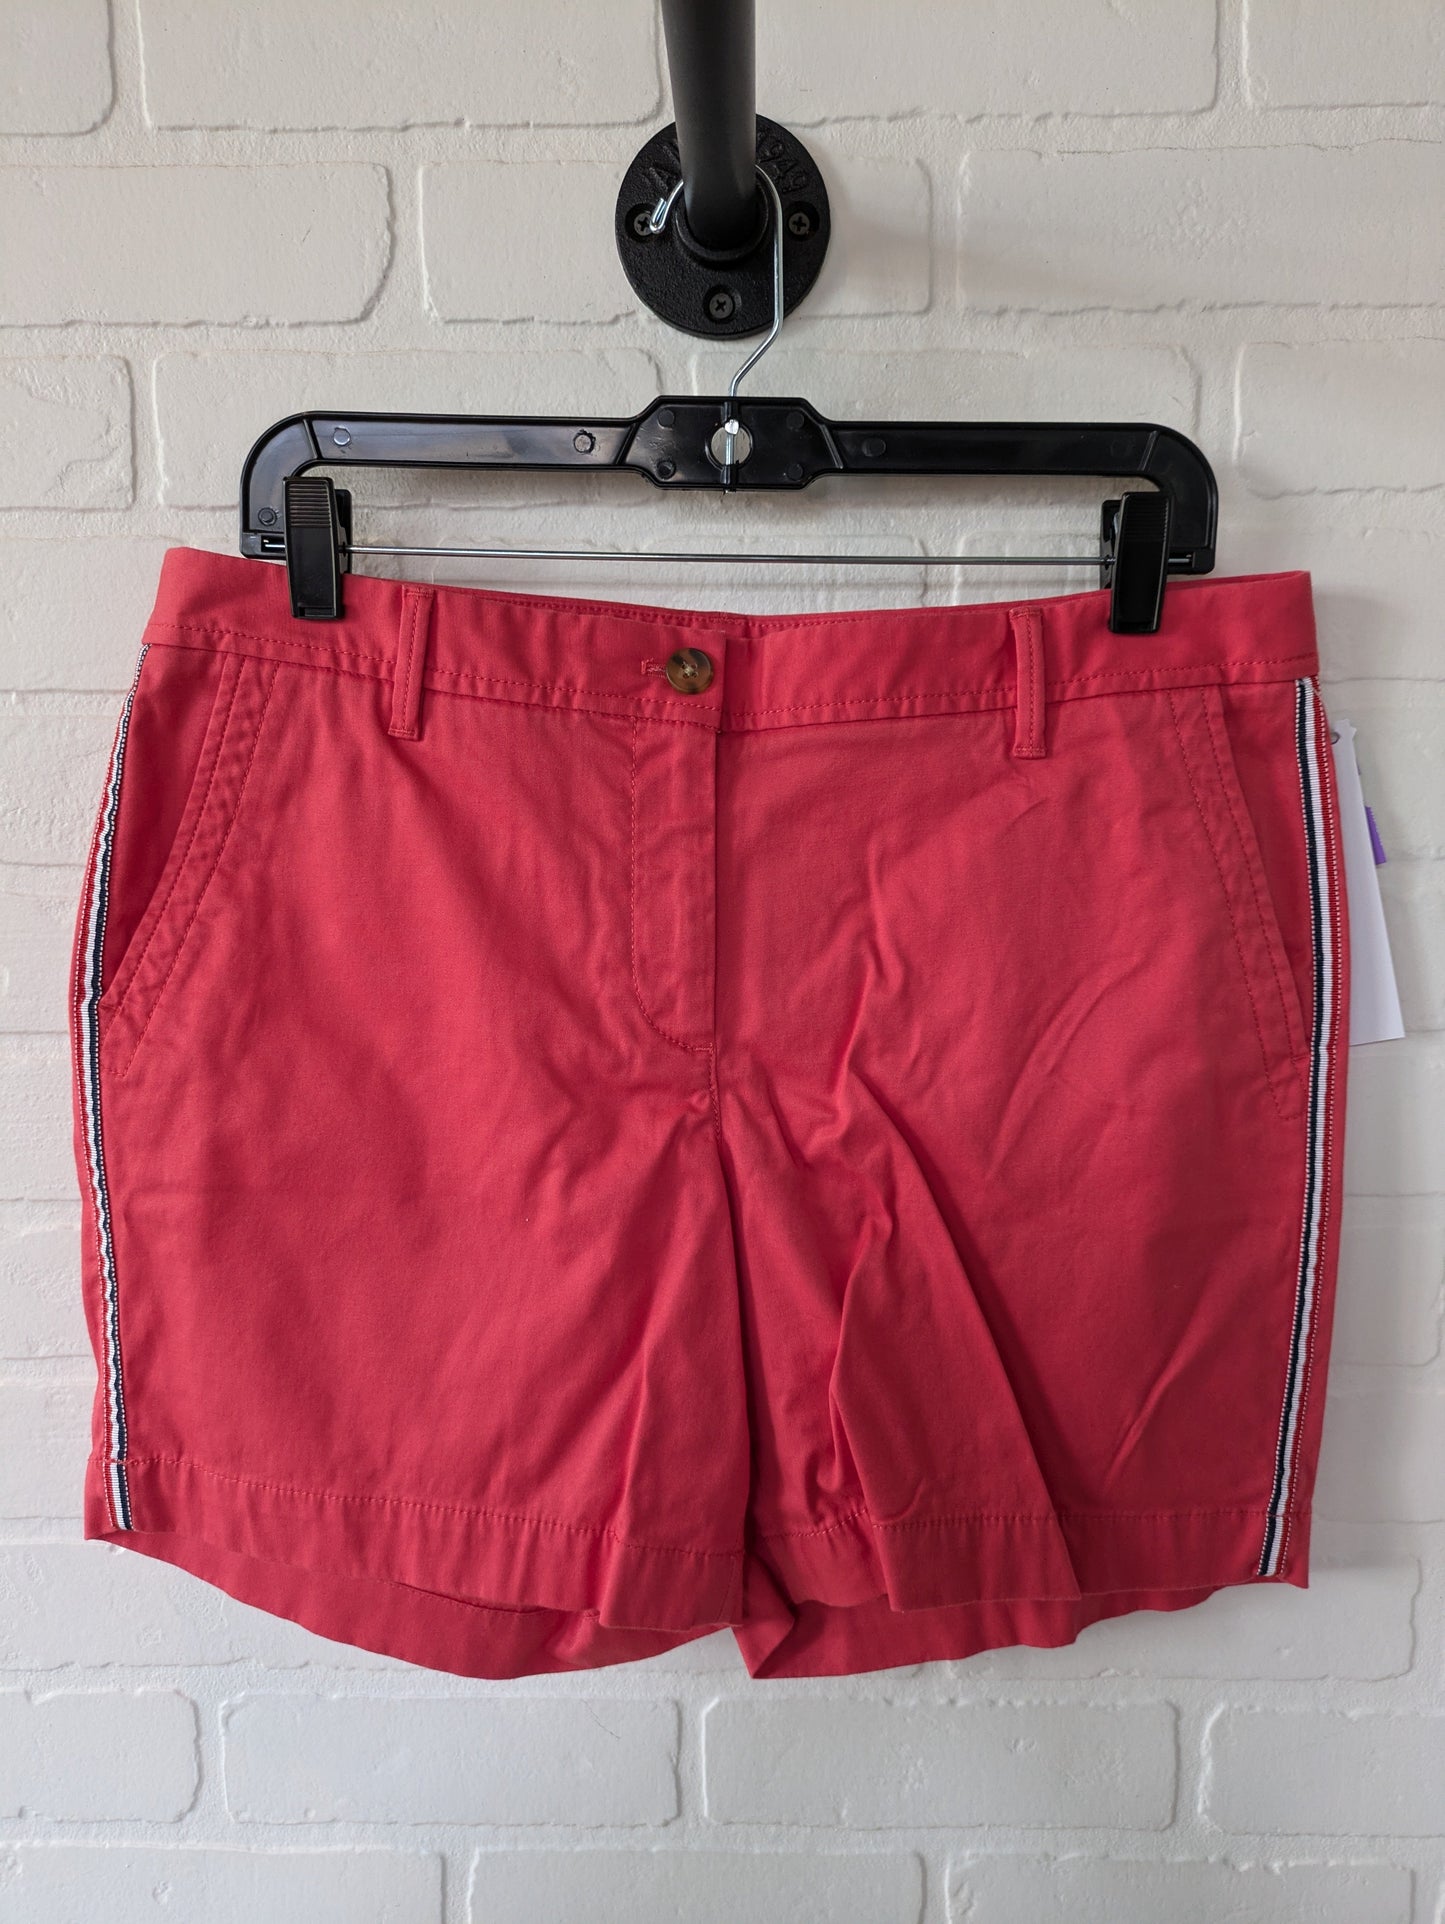 Red Shorts Talbots, Size 10petite